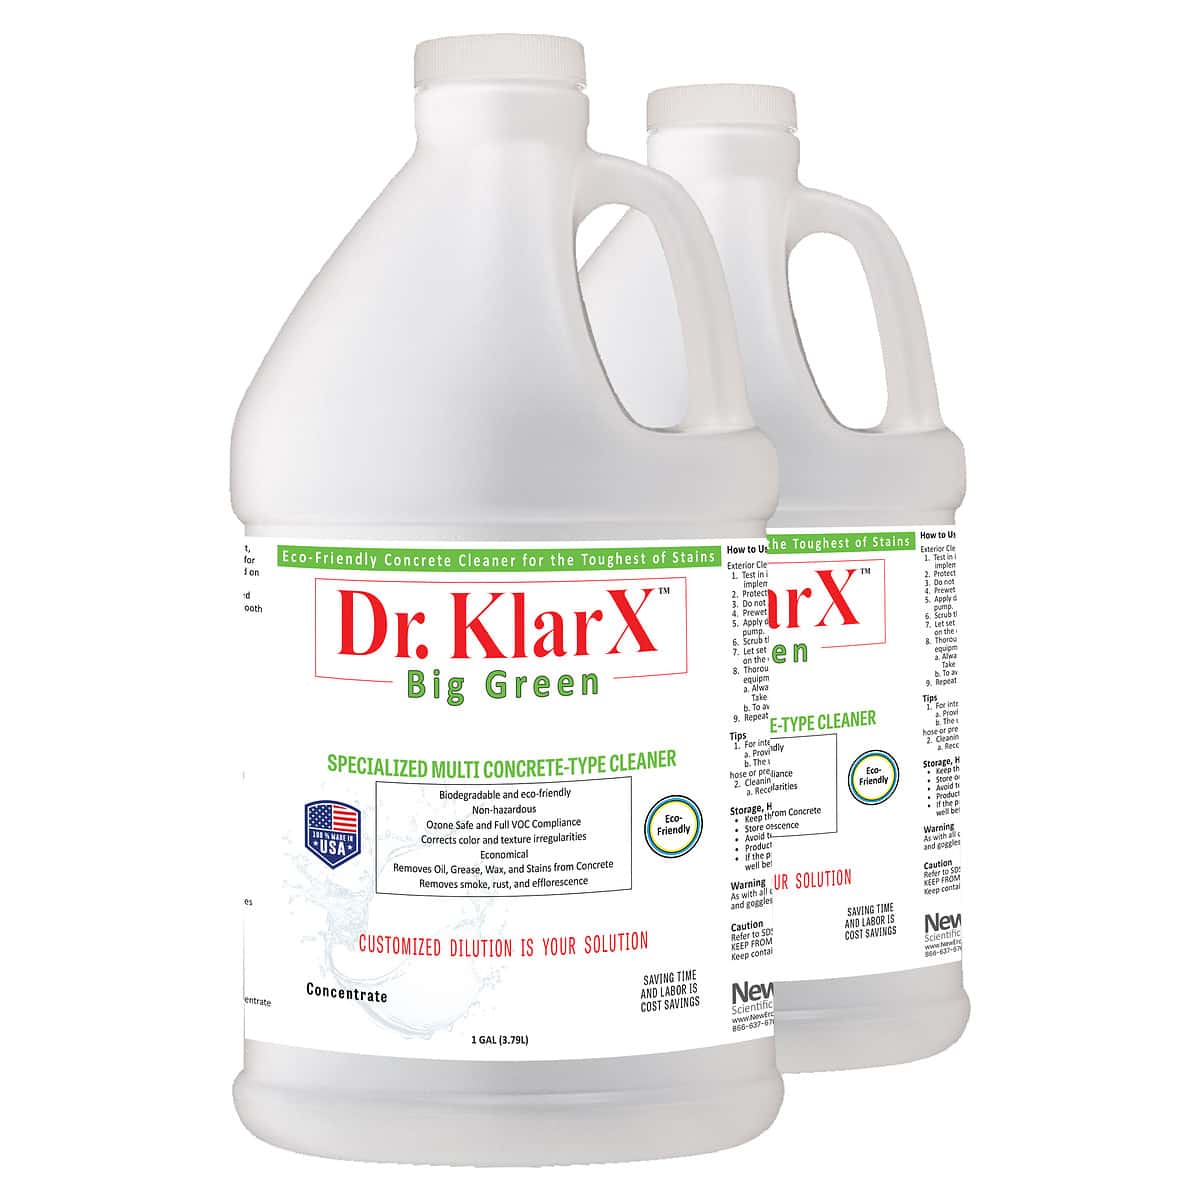 Dr. KlarX Big Green 2/1-gallon bottle